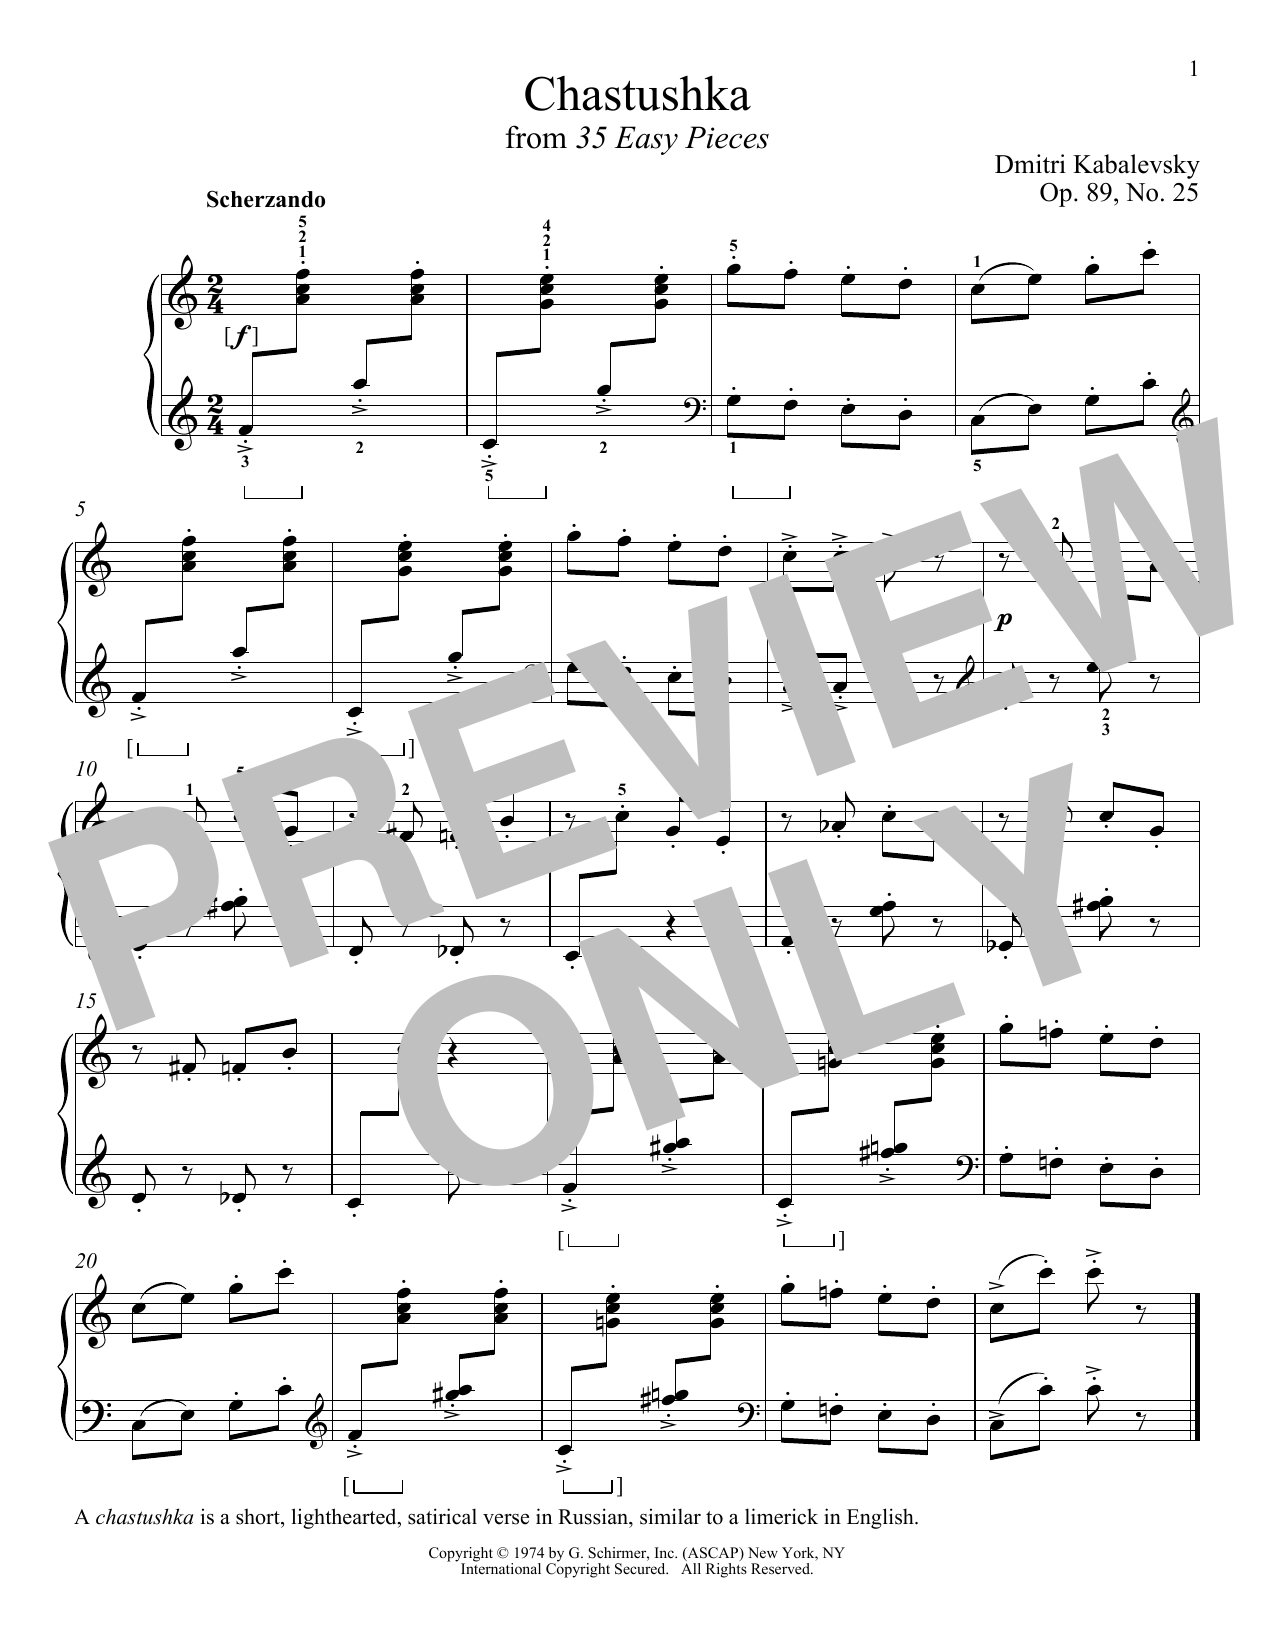 Dmitri Kabalevsky Chastushka, Op. 89, No. 25 Sheet Music Notes & Chords for Piano - Download or Print PDF